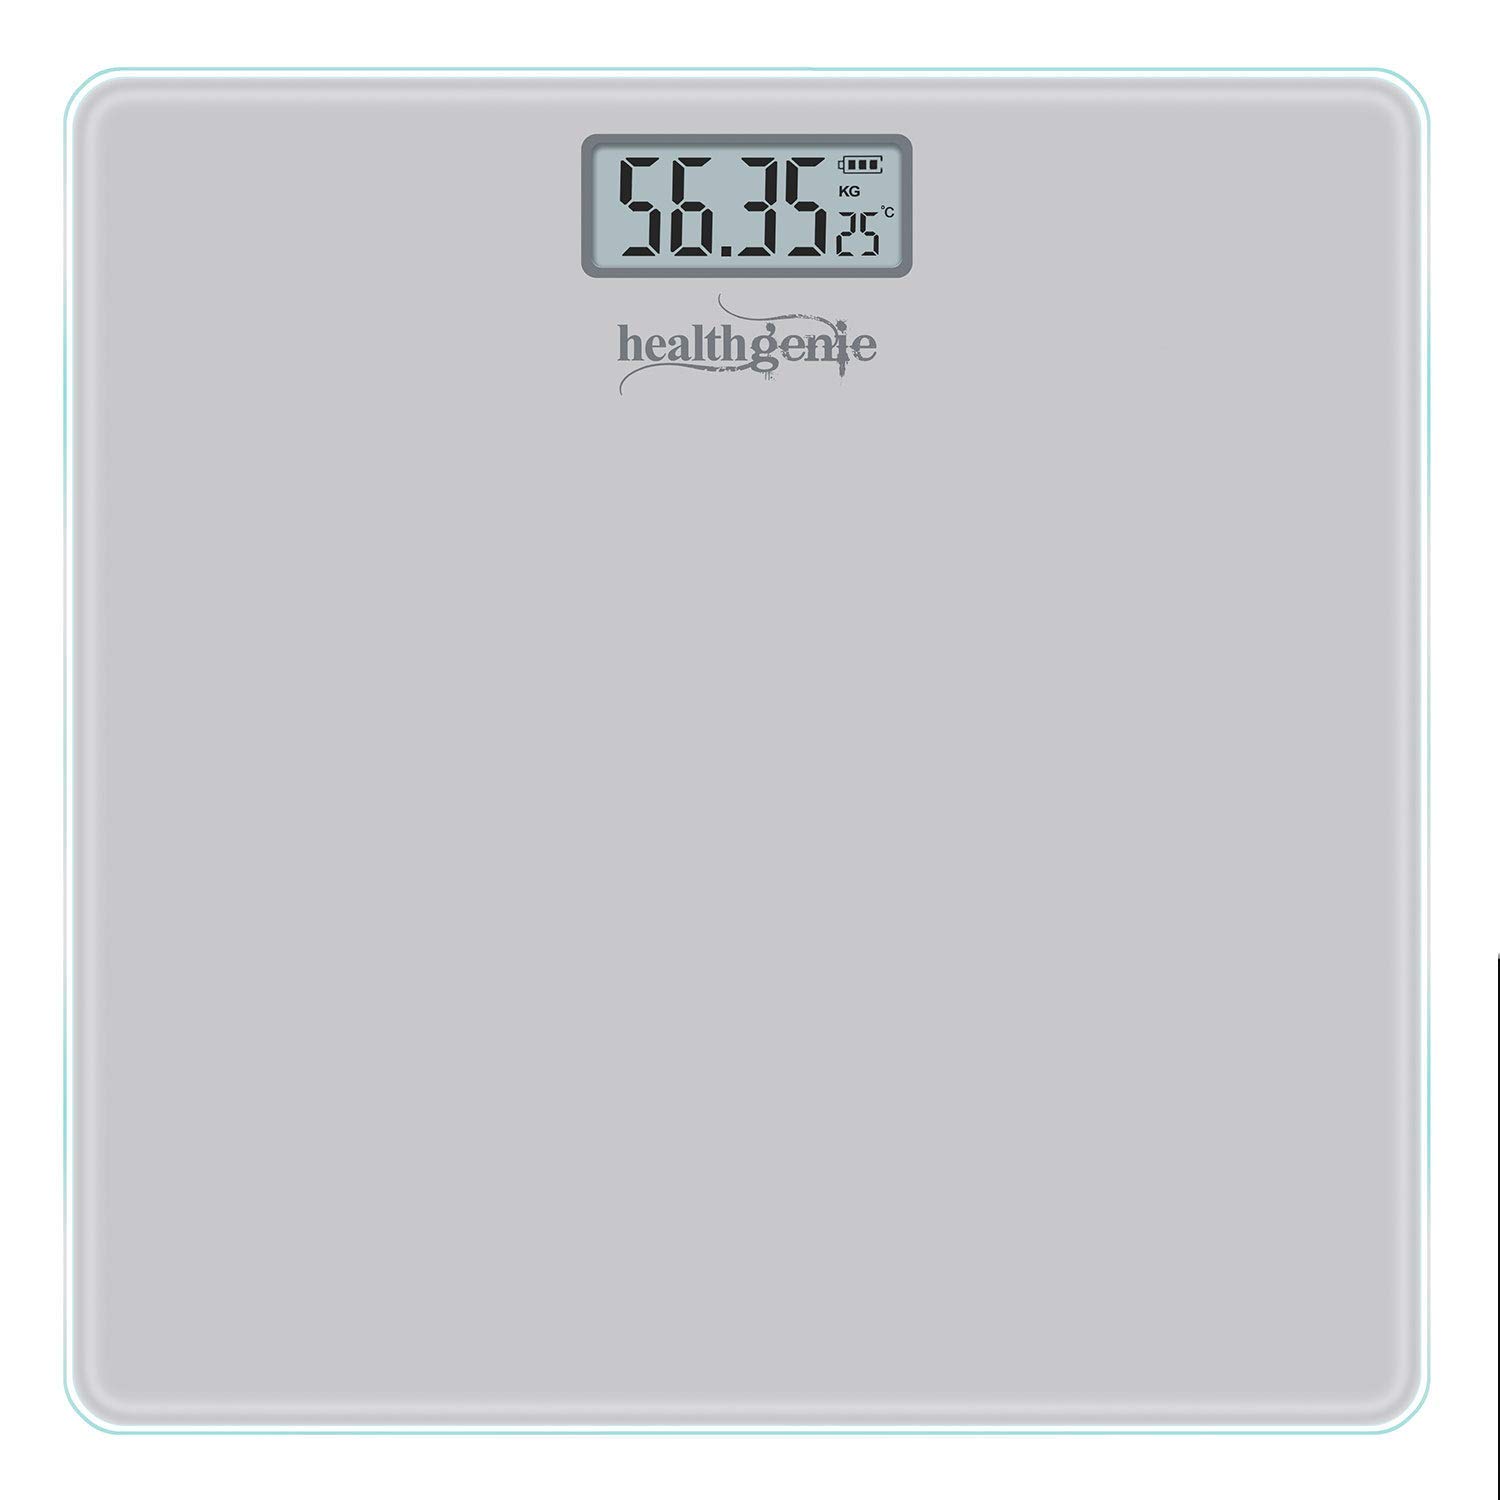 Healthgenie Digital Personal Weighing Scale Hd 221 Mini Silver